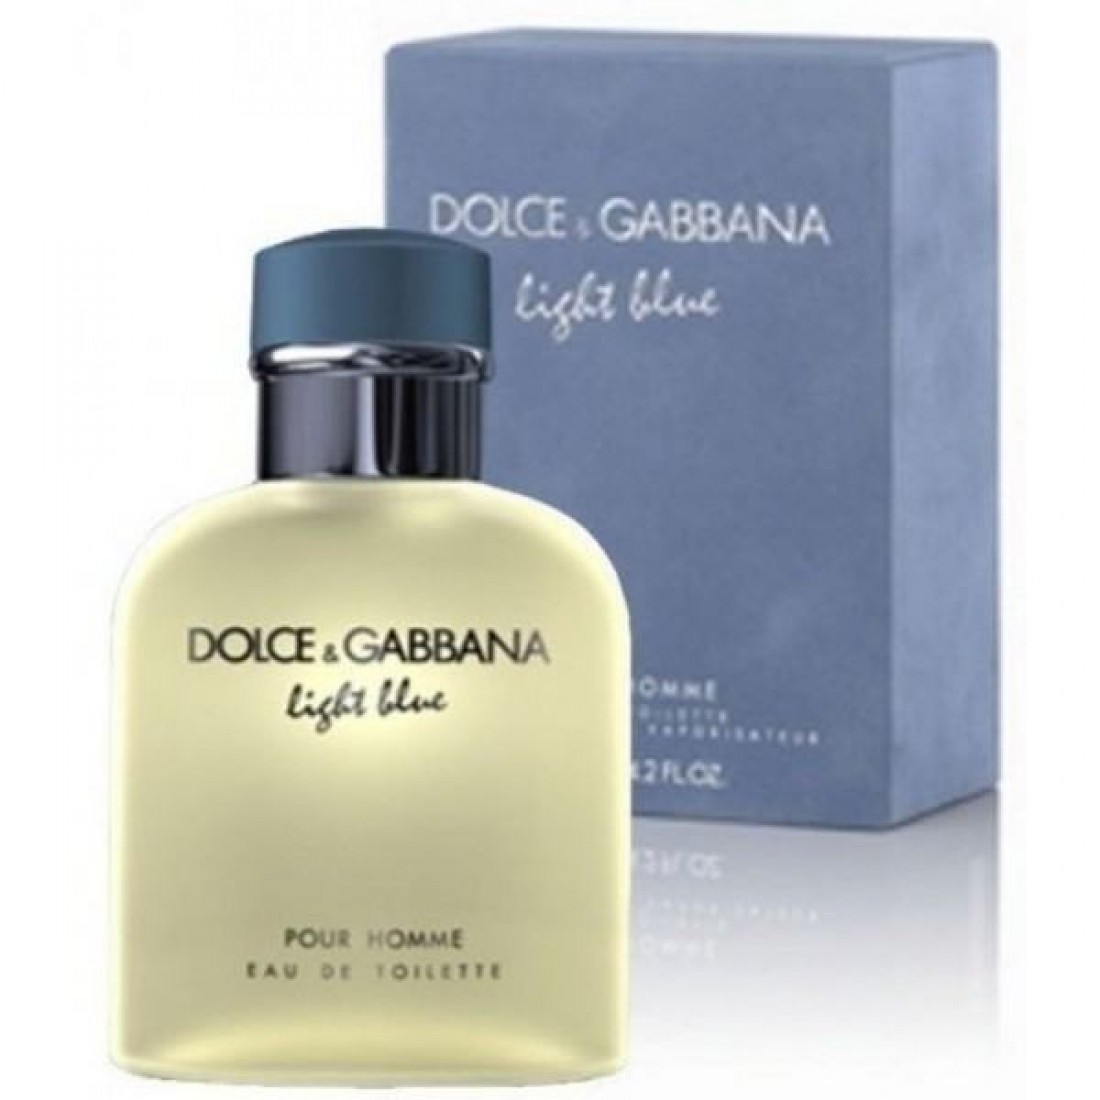 dolce and gabanna light blue review men